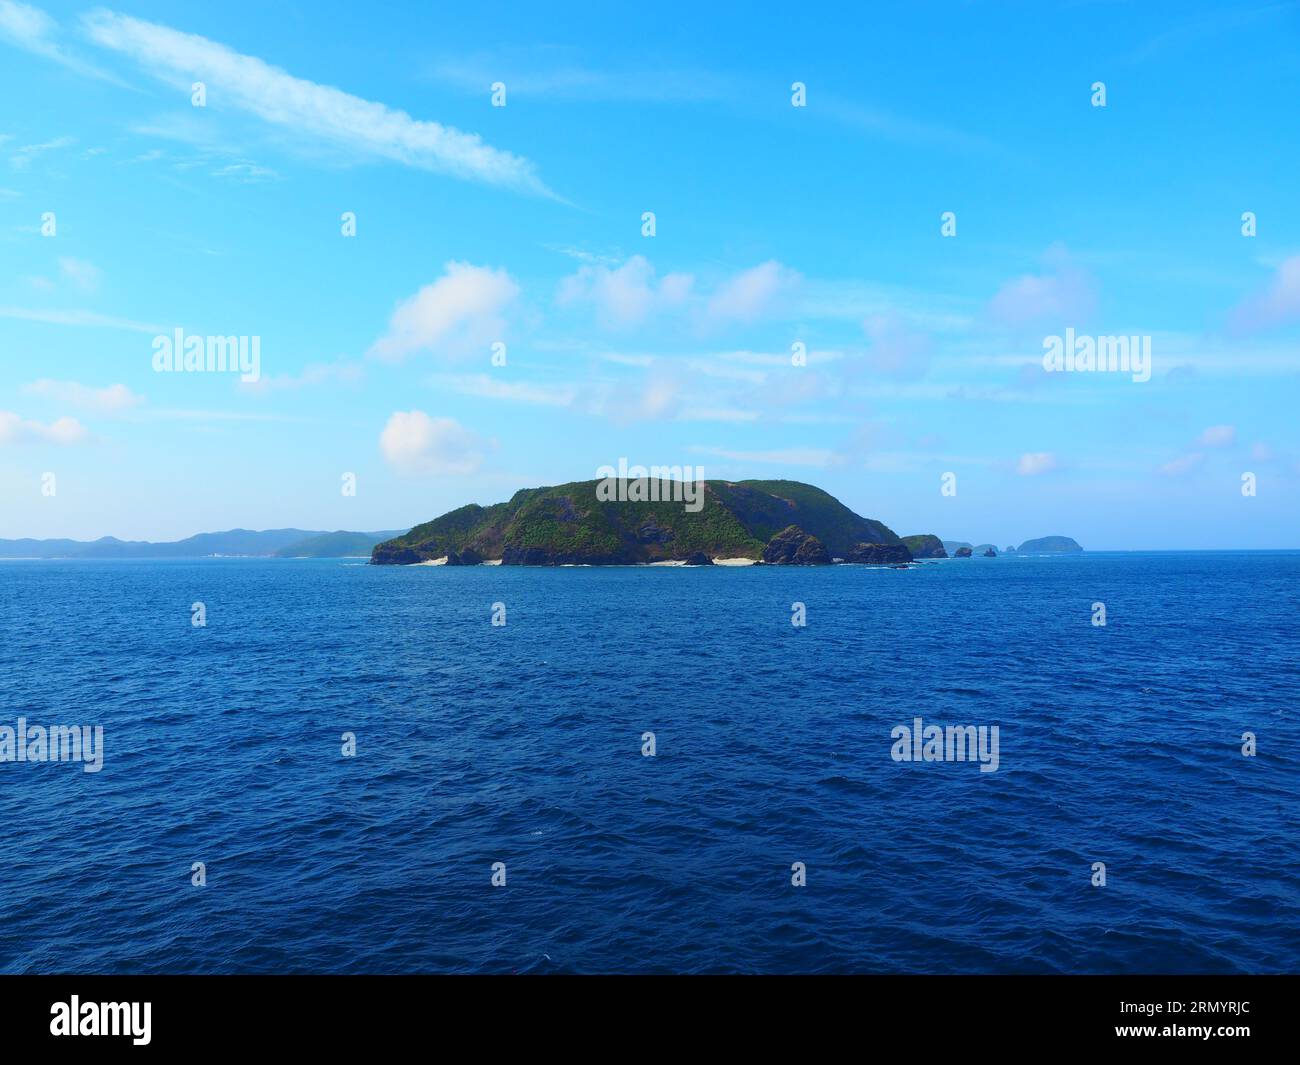 Kerama-Inseln, Nationalpark, Okinawa, Japan - Blaue Zonen Stockfoto